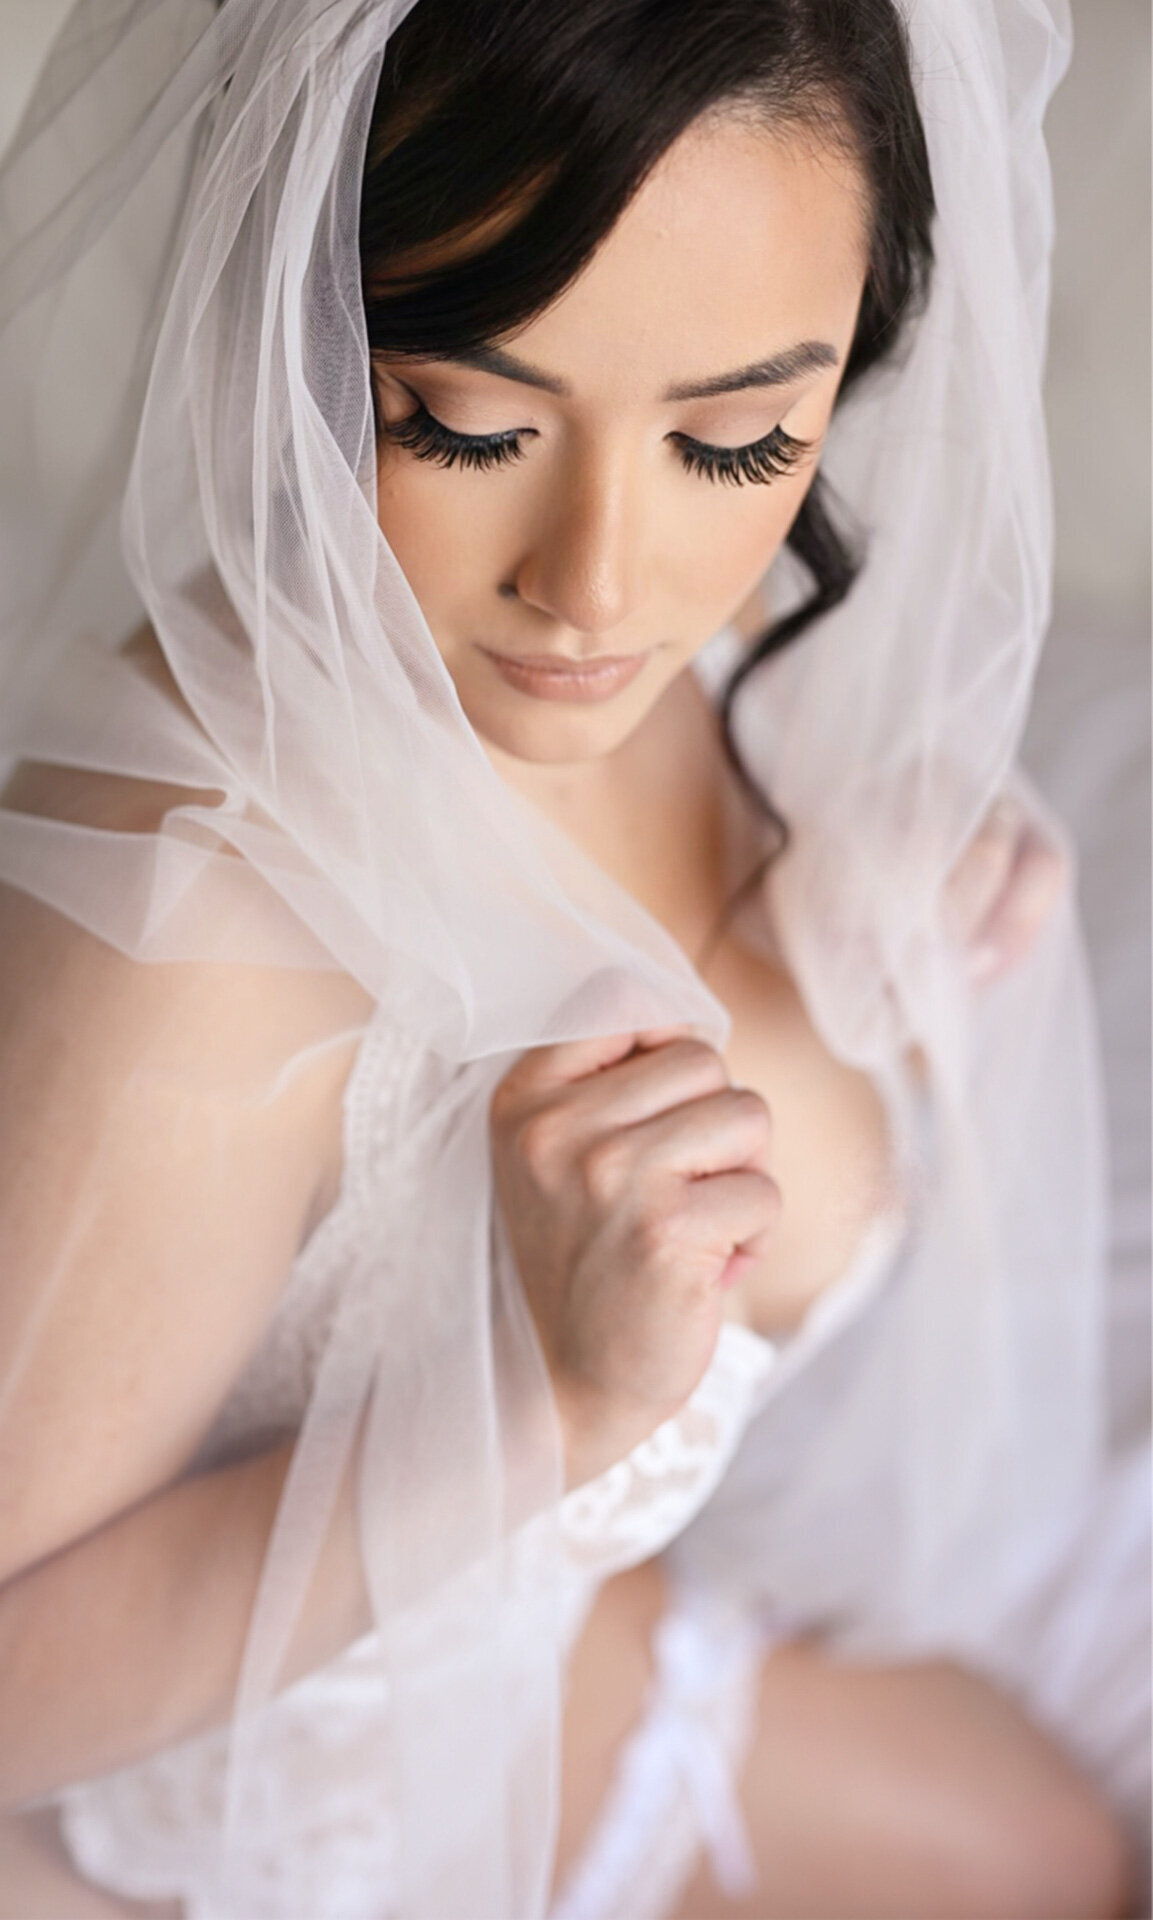 bridal-boudoir-portrait-with-wedding-veil